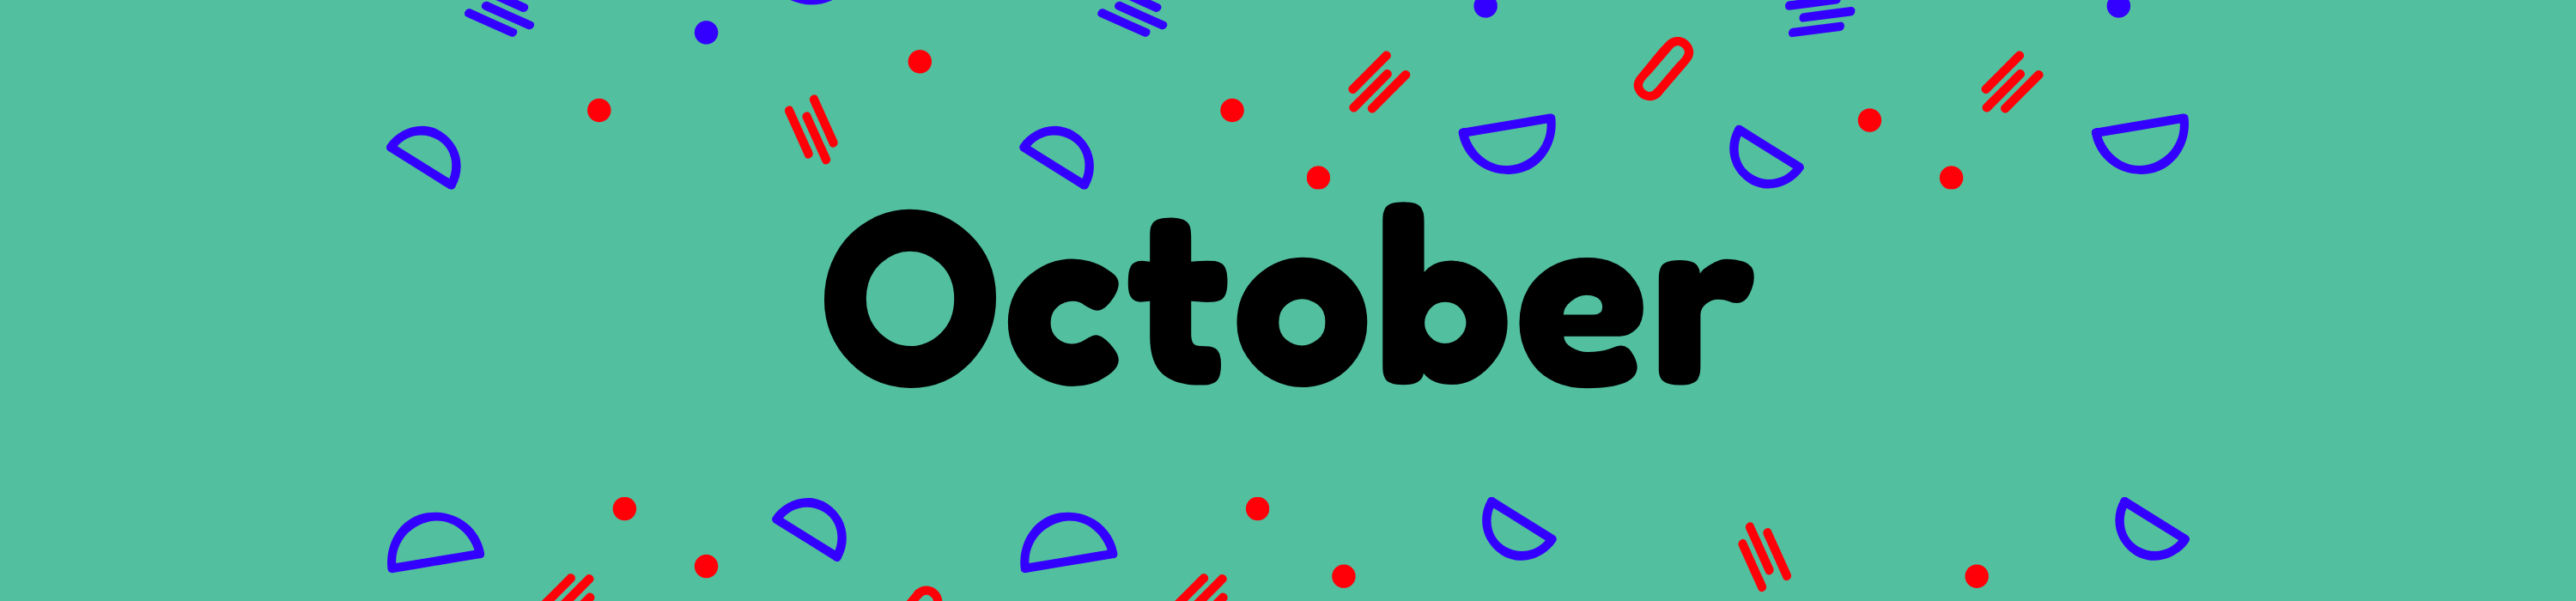 October-banner